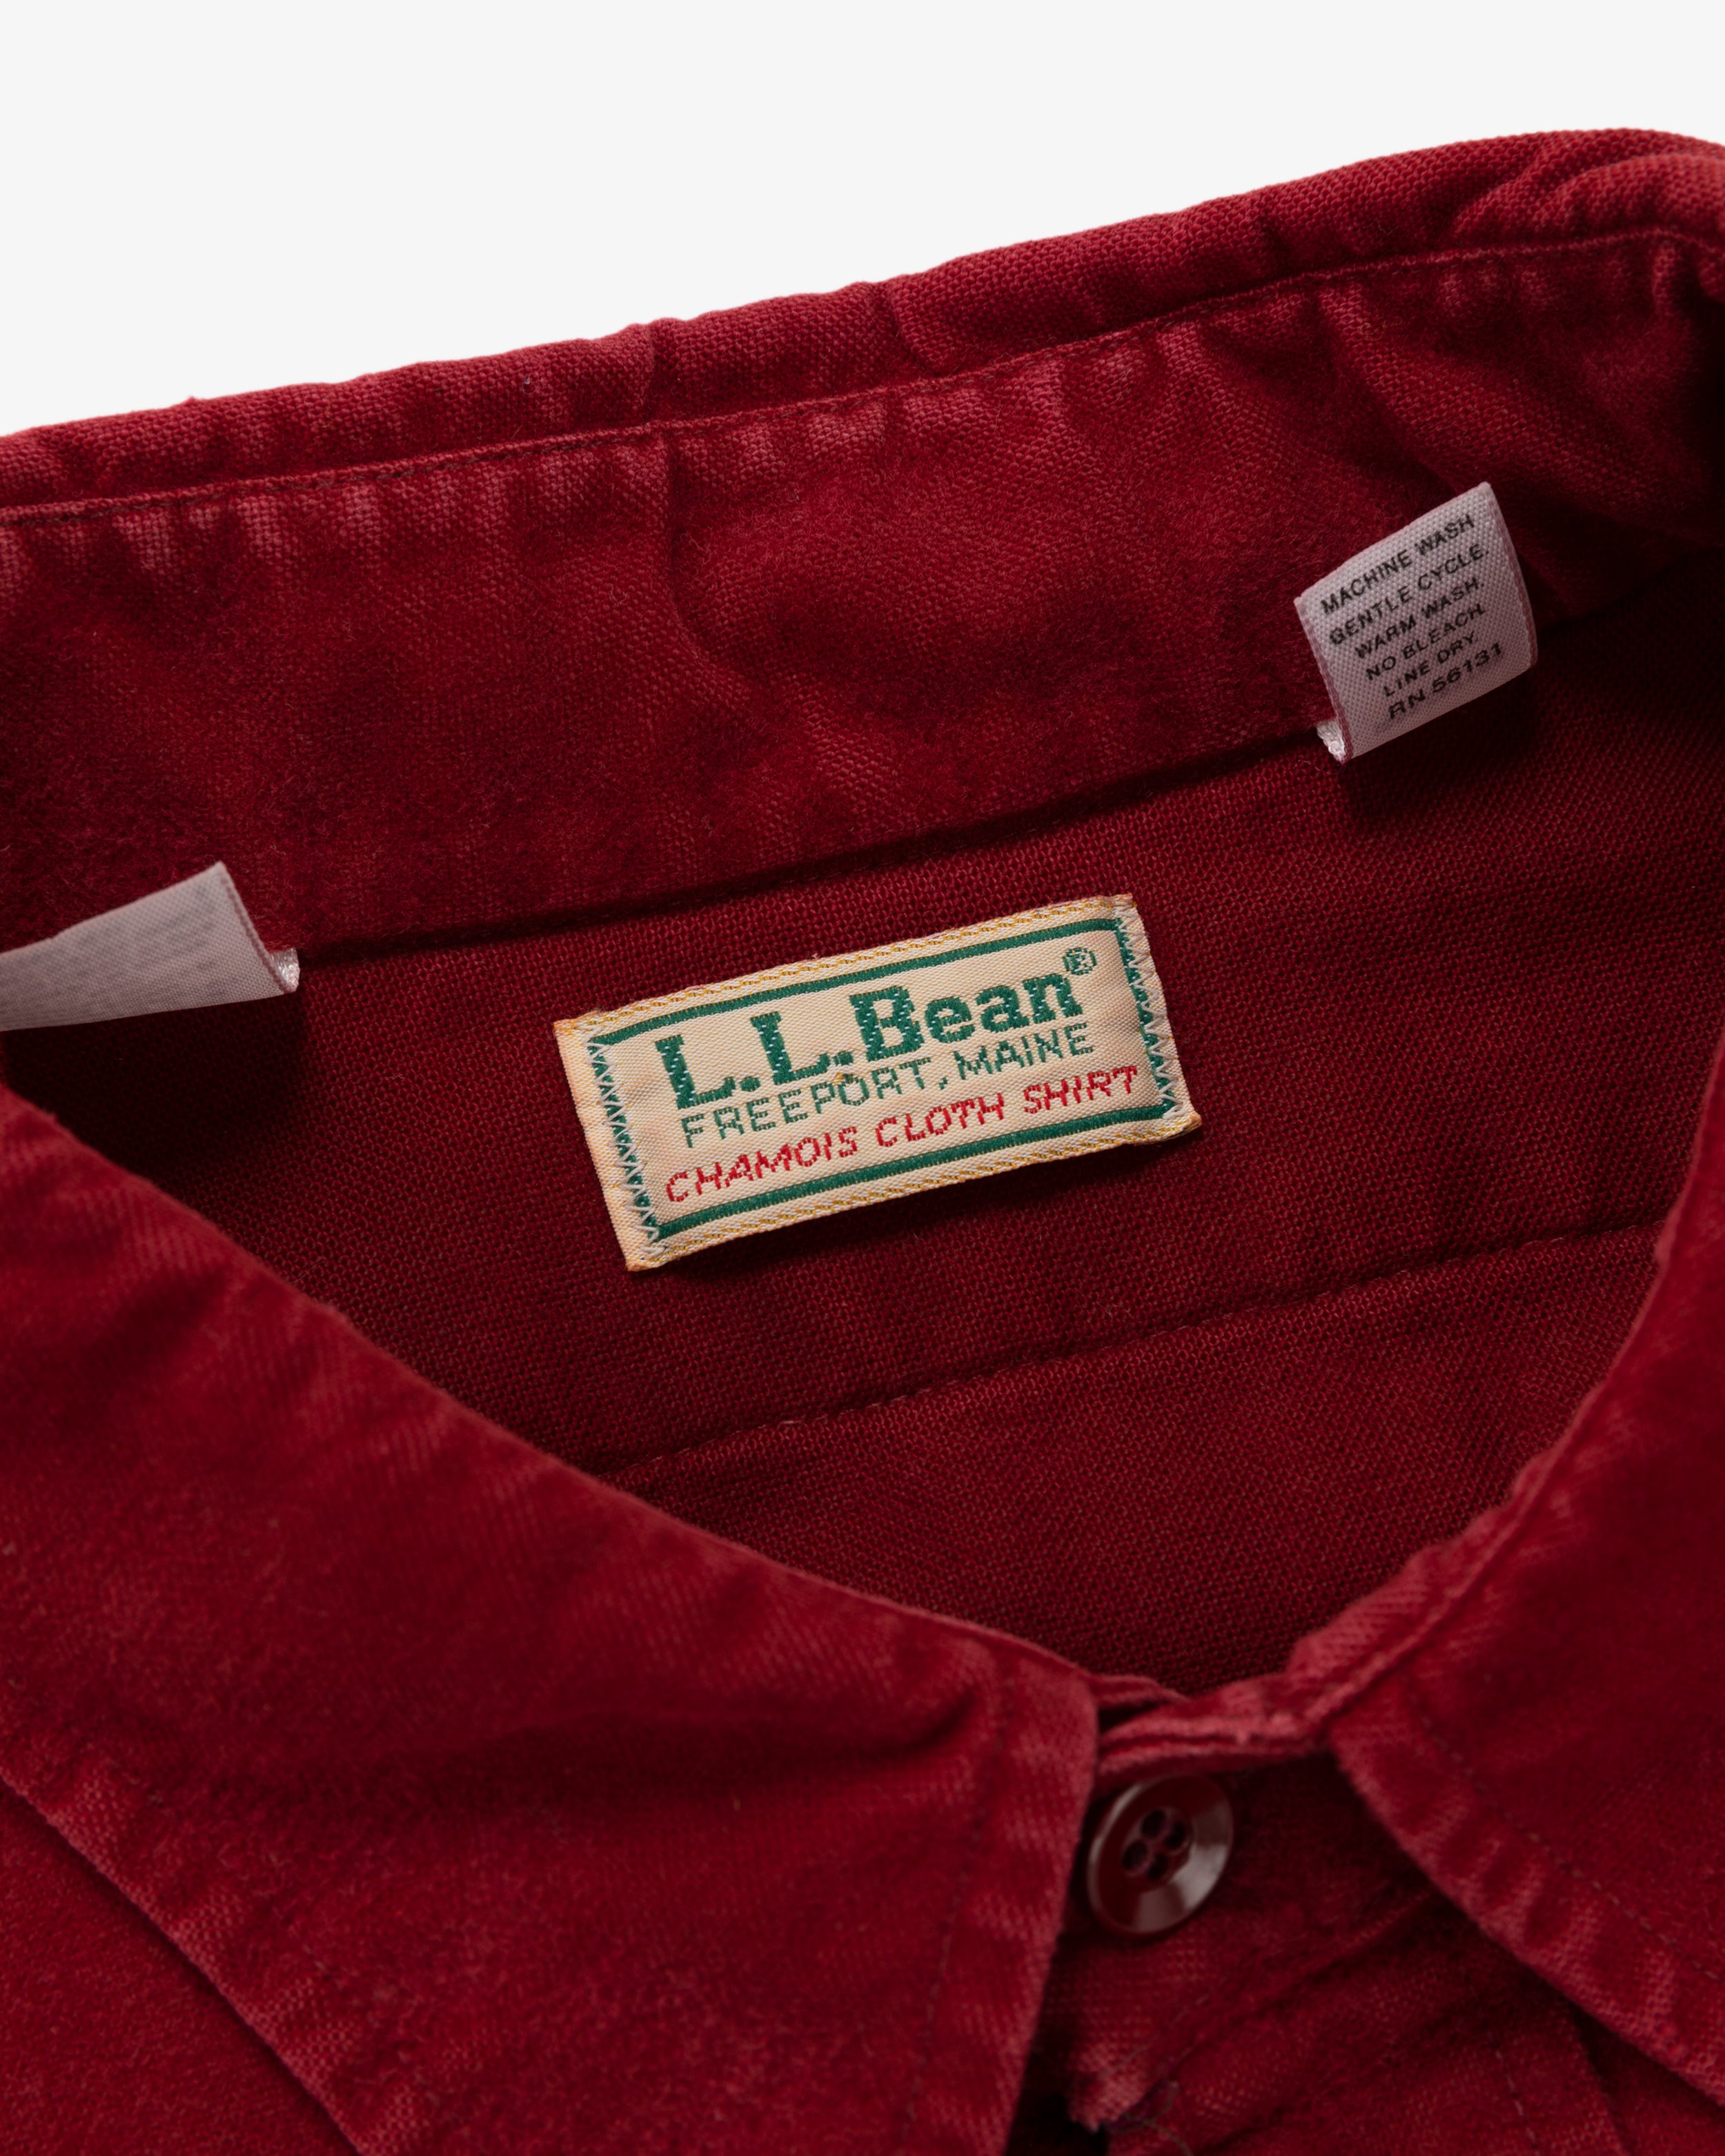 L.L. Bean Chamois Shirt